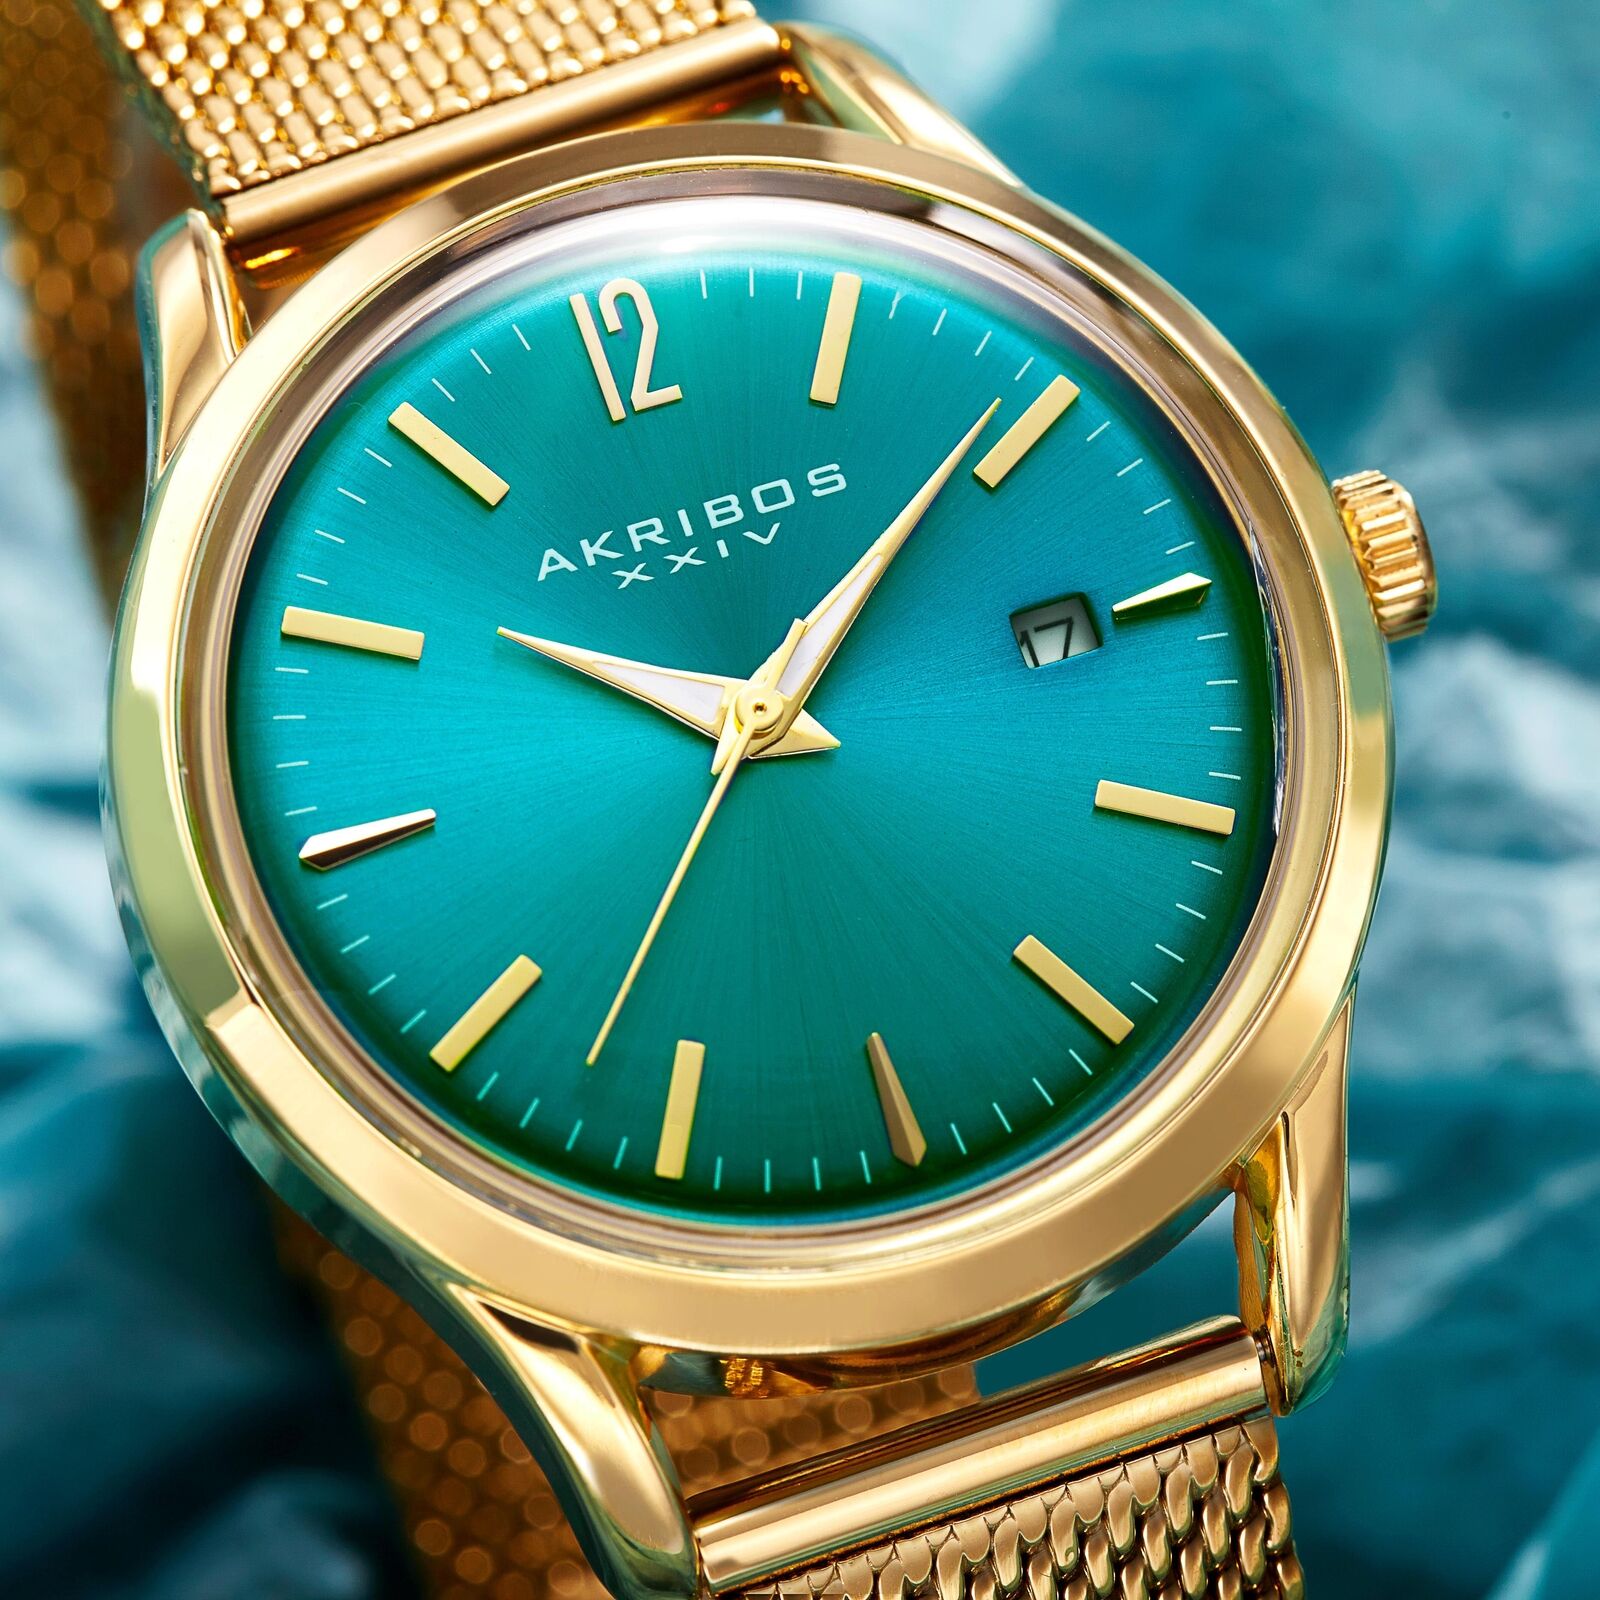 akribos womens watch new in gold tone | eBay